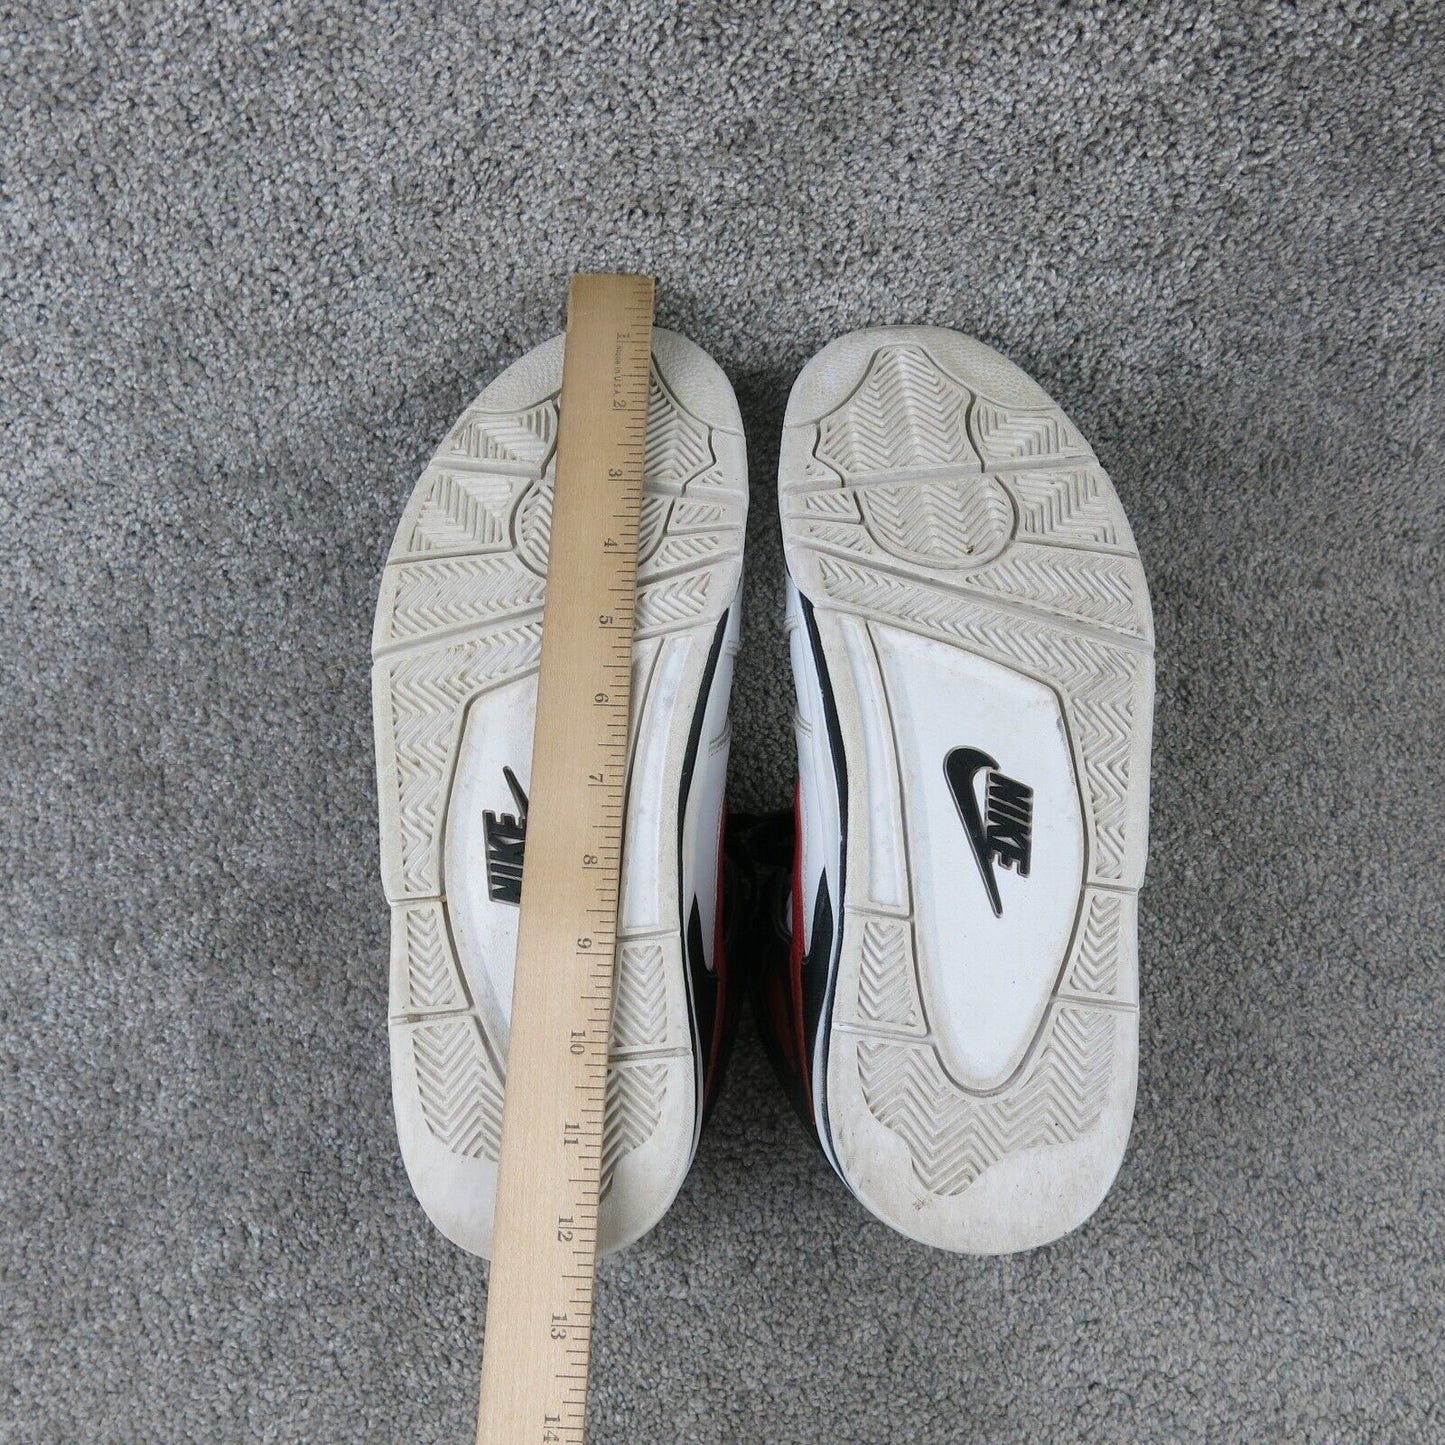 Nike Air Flight Falcon Shoes 397204-161 Black White Athletic Sneaker Size US 12